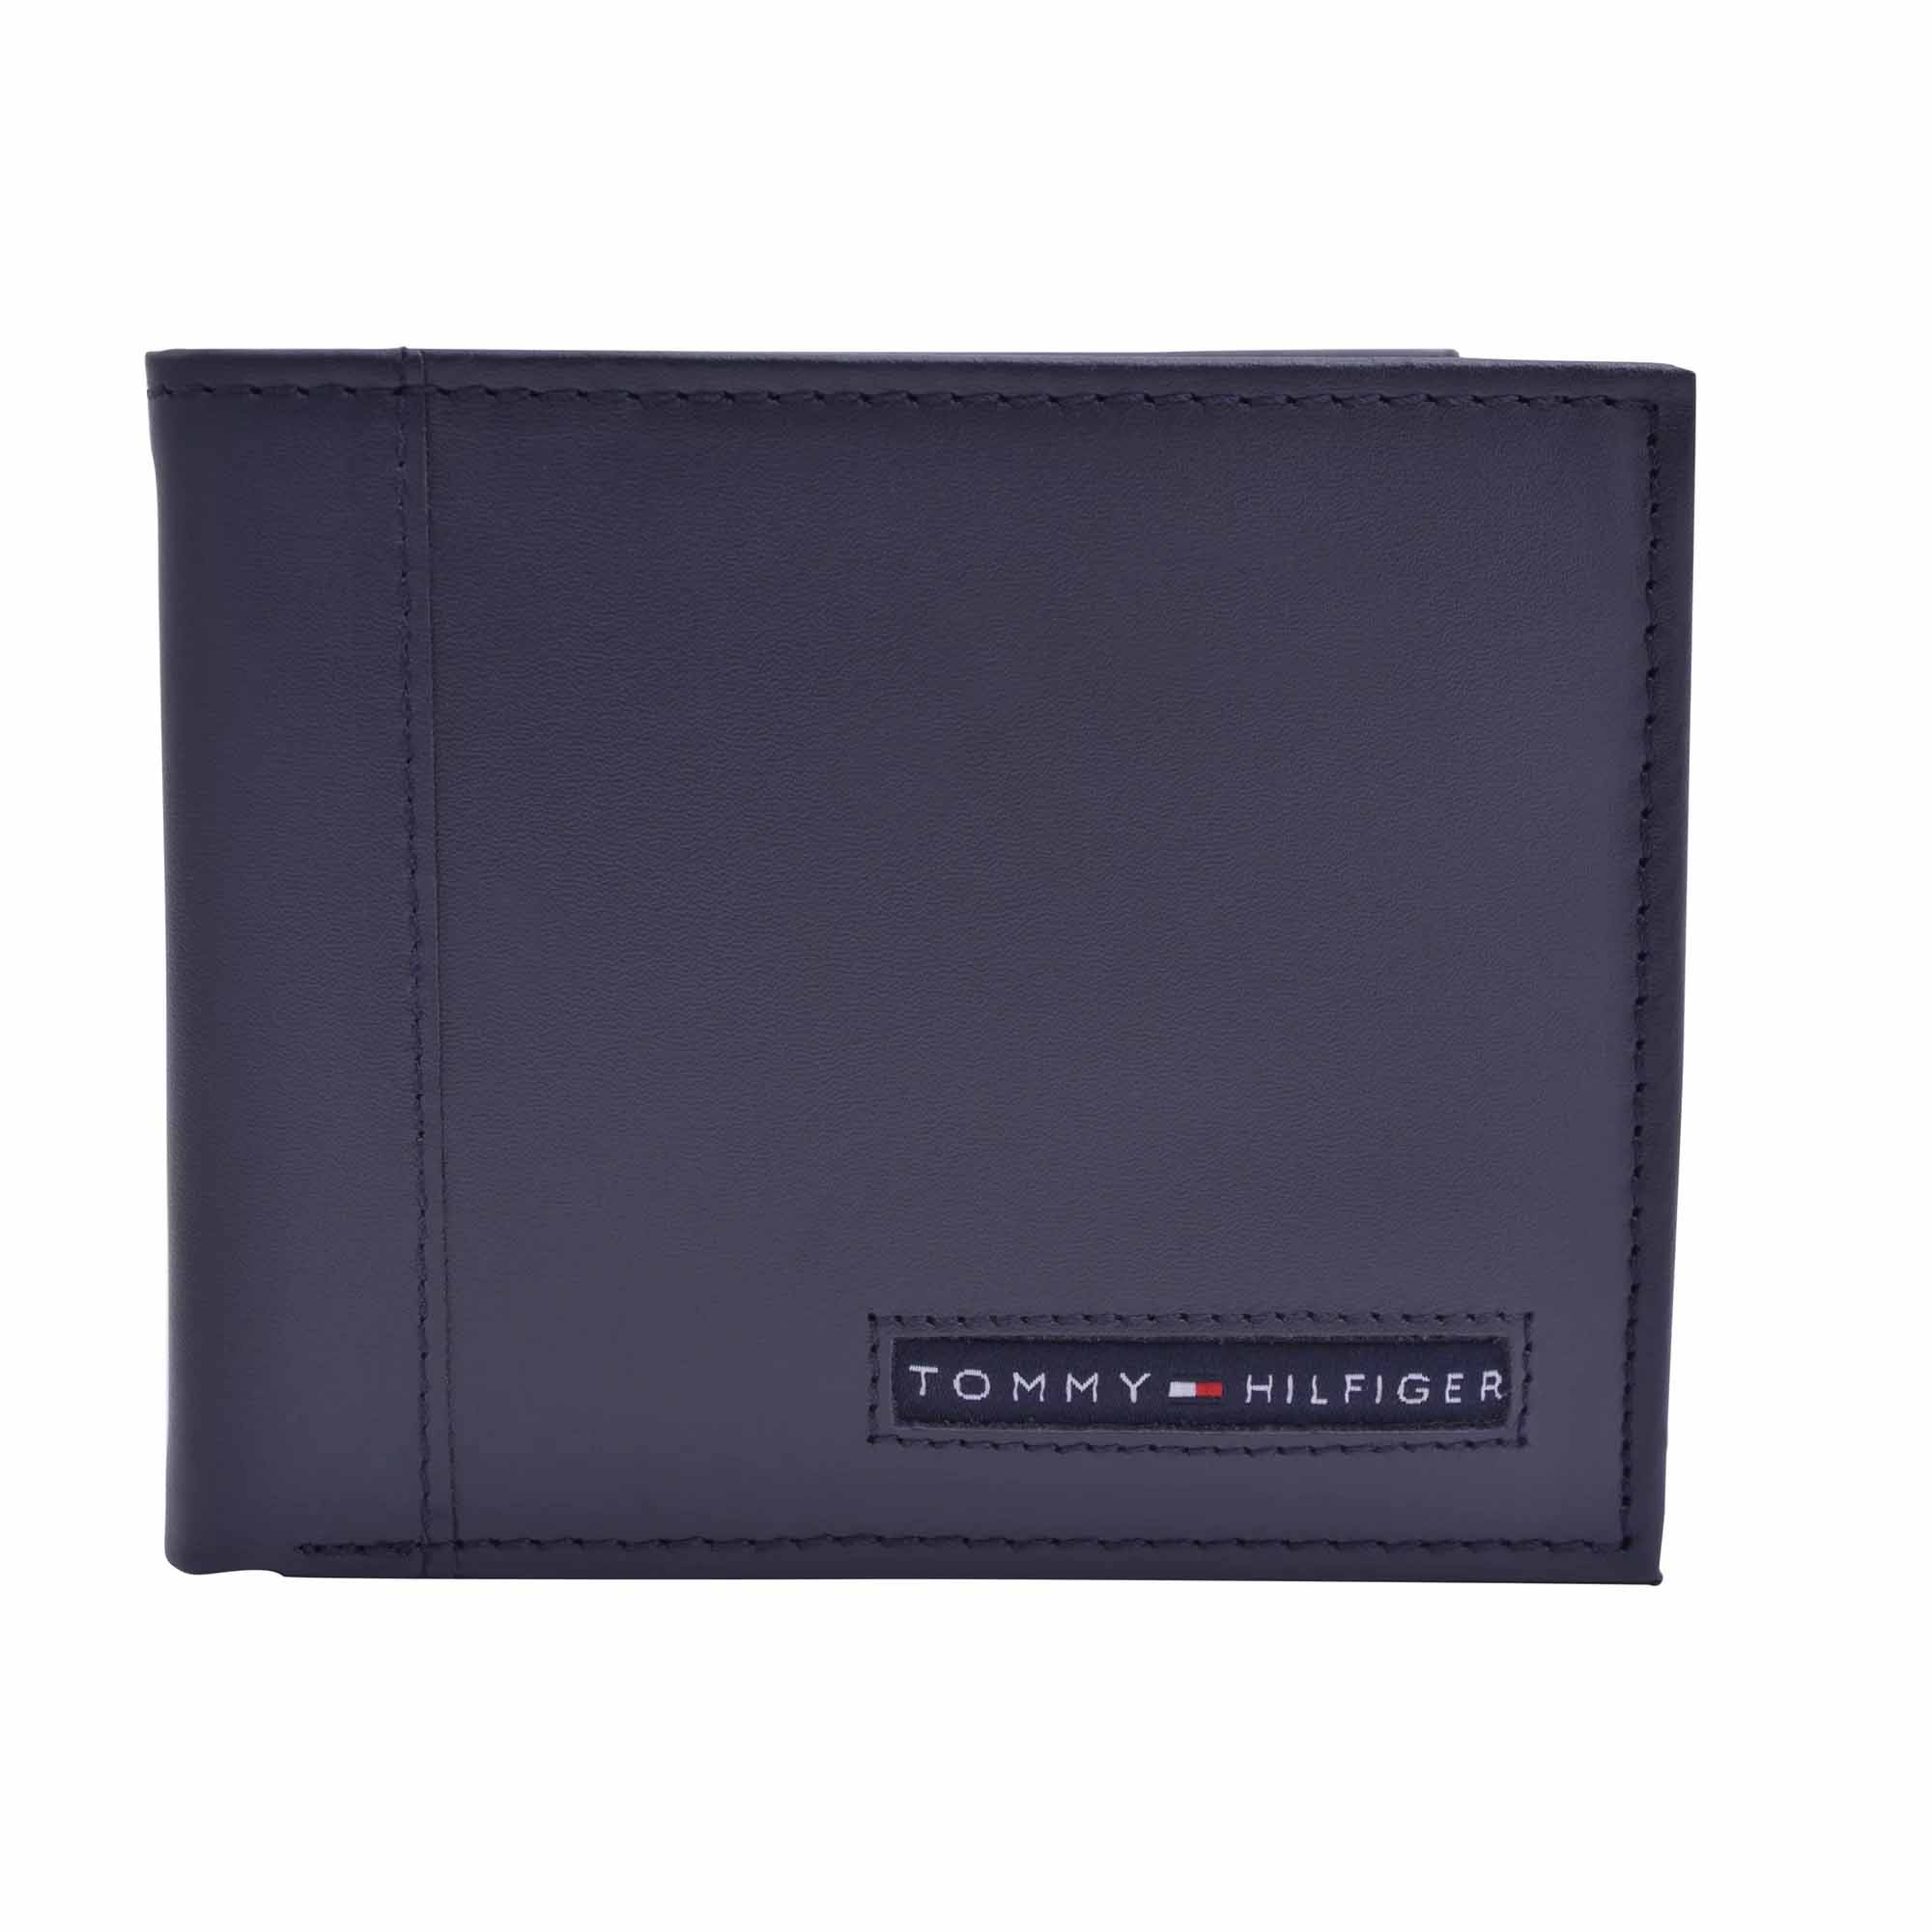 Tommy Hilfiger Men's Genuine Leather Passcase Billfold Wallet in navy blue 